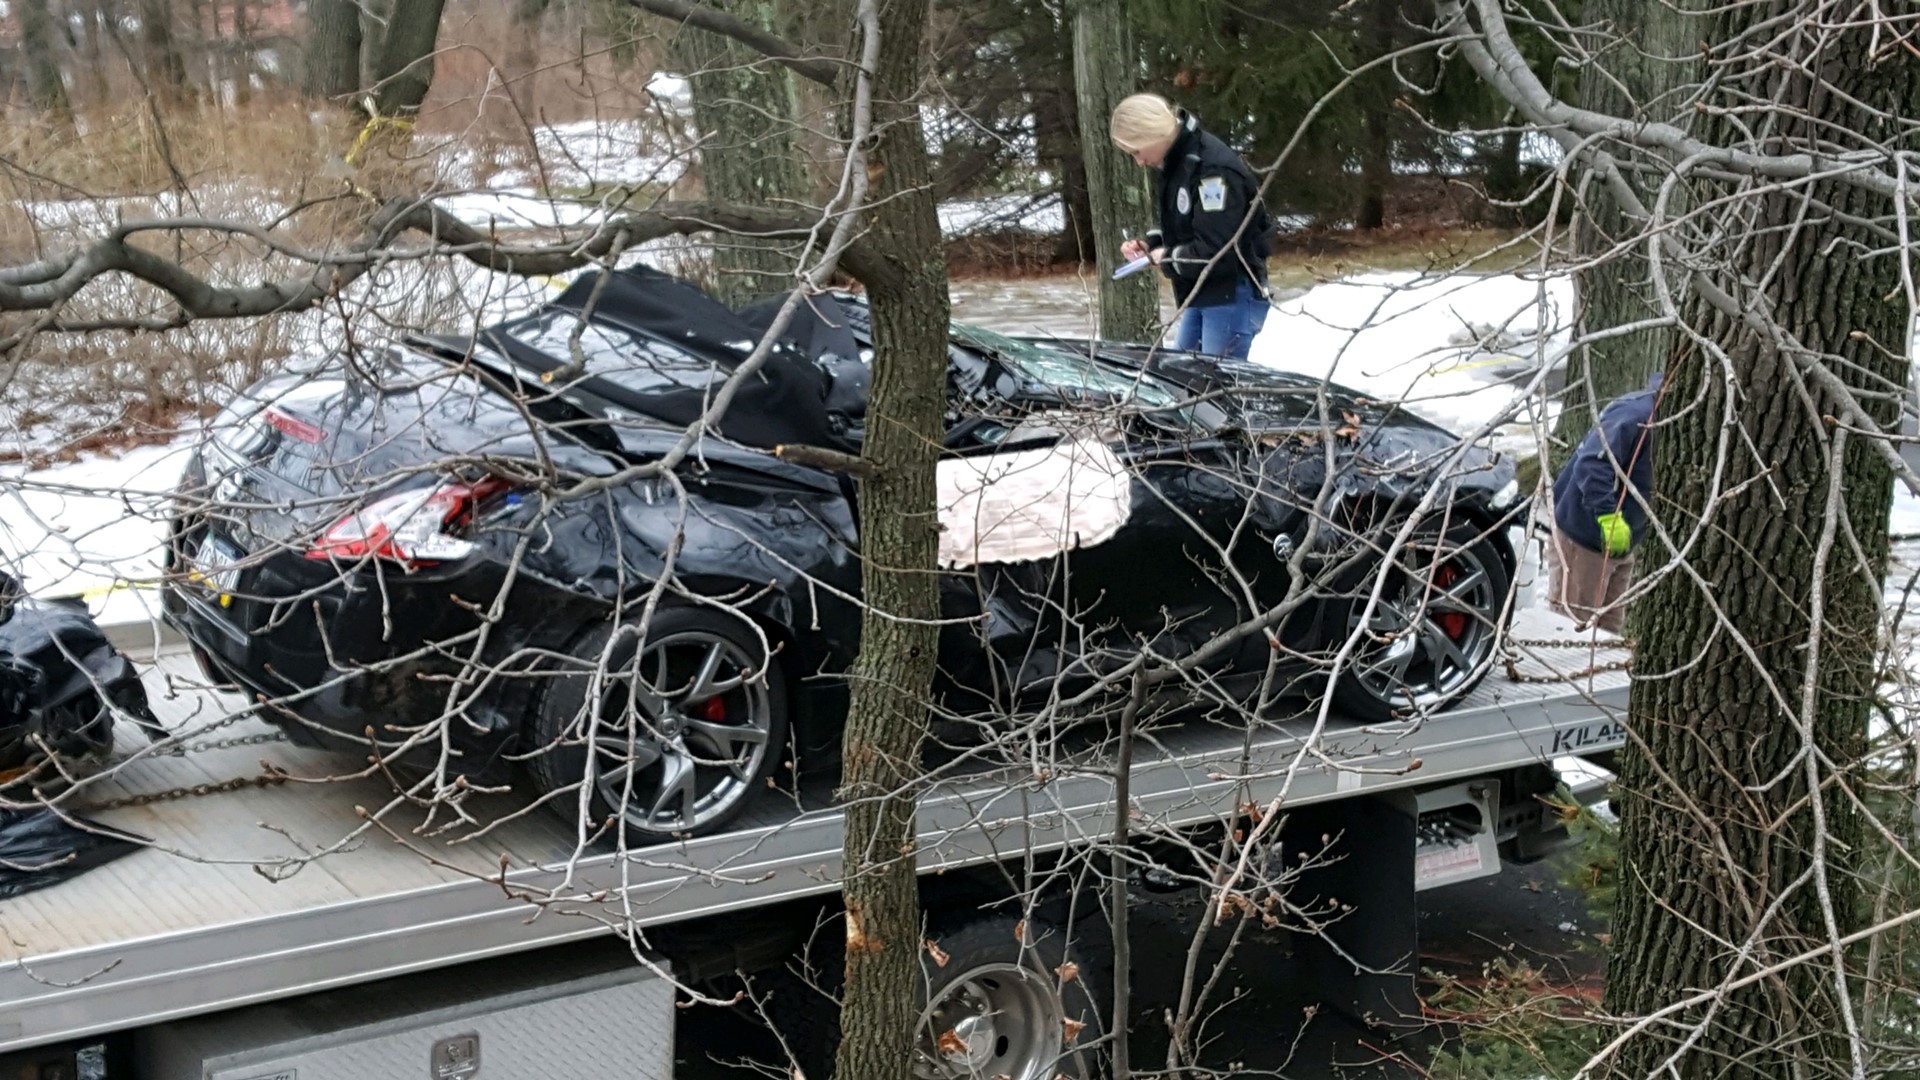 One Dead After Crash of Stolen Car in Scranton